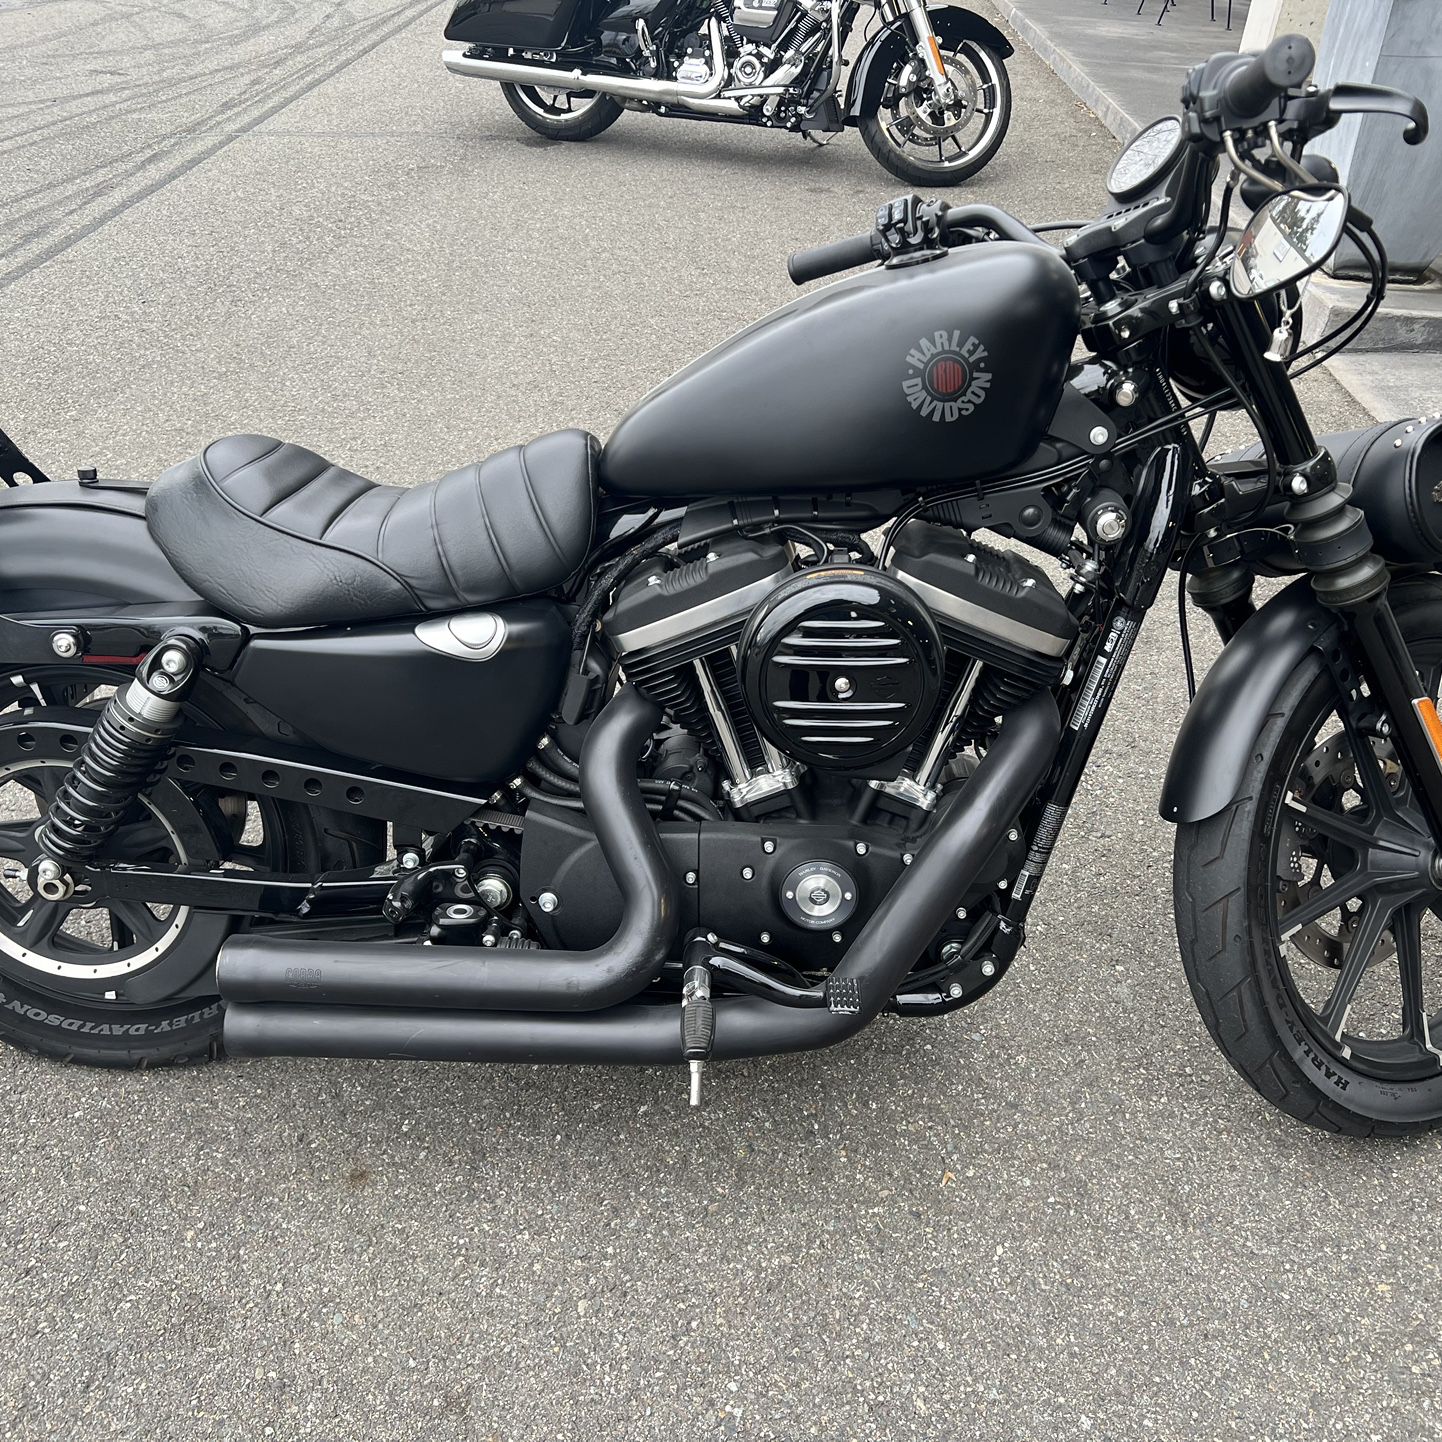 Harley Davidson 2019 883 iron